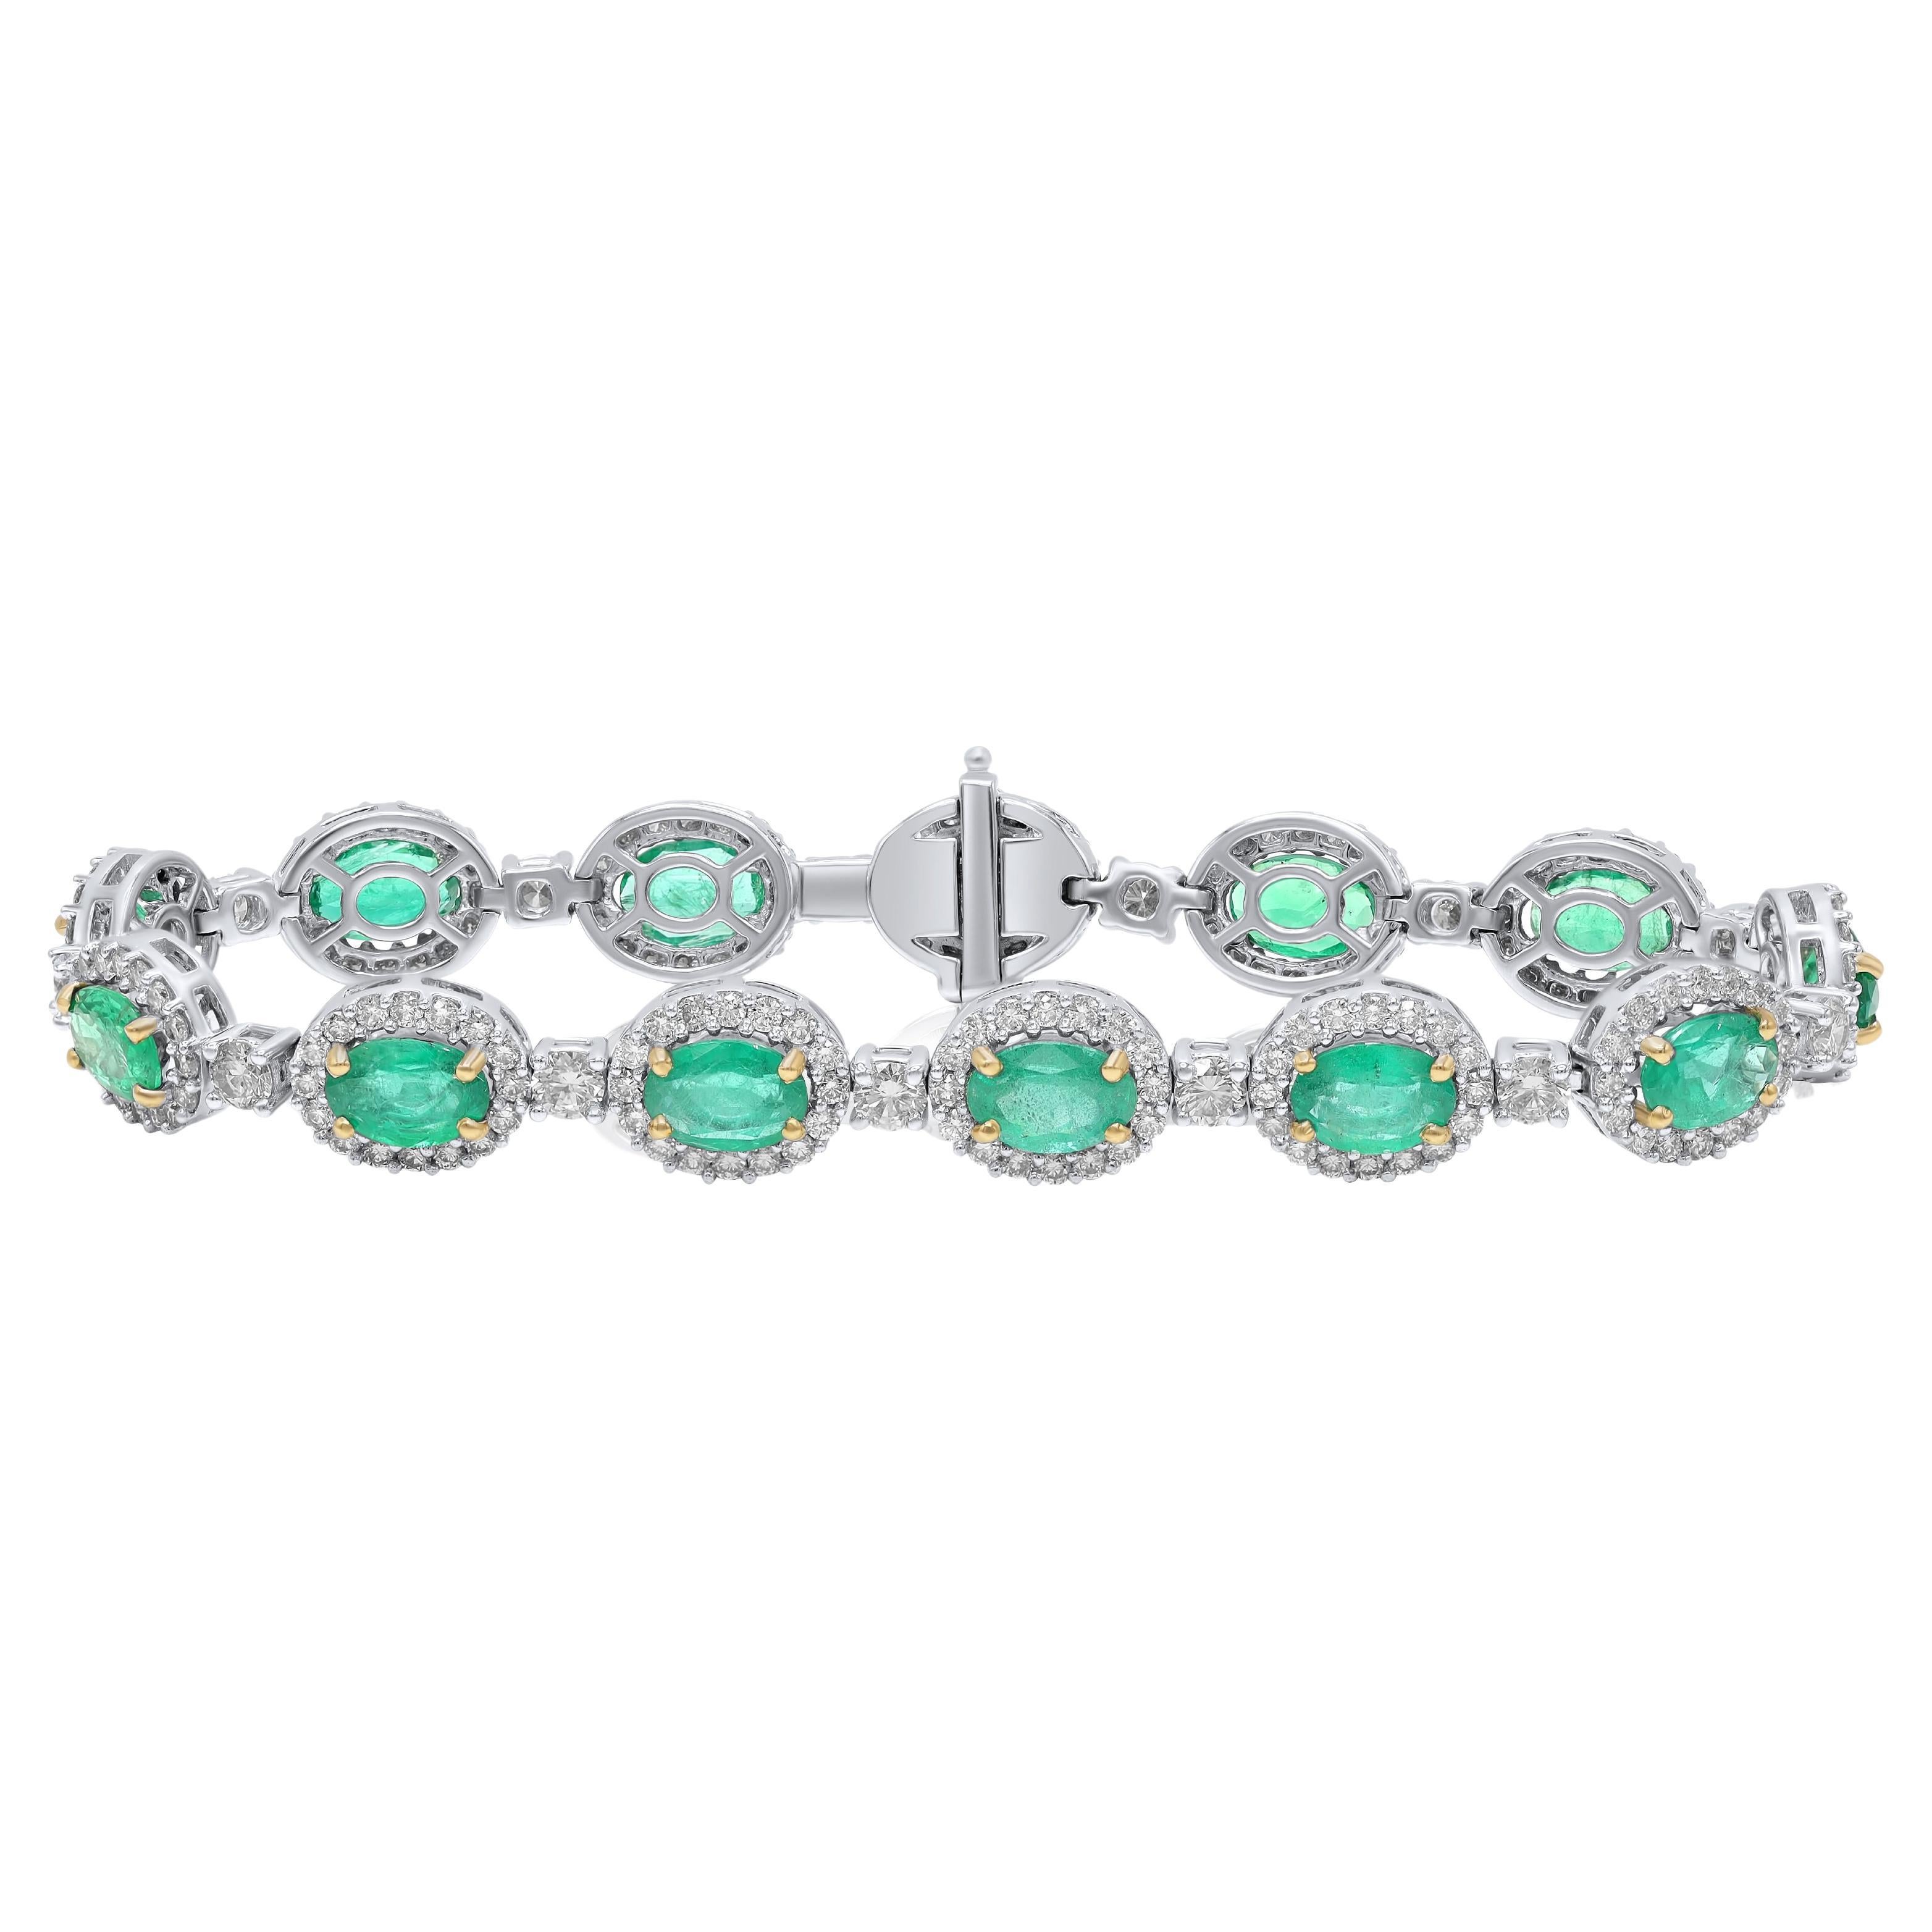 Diana M. 8.01 Carat Emerald and Diamond Bracelet in White Gold